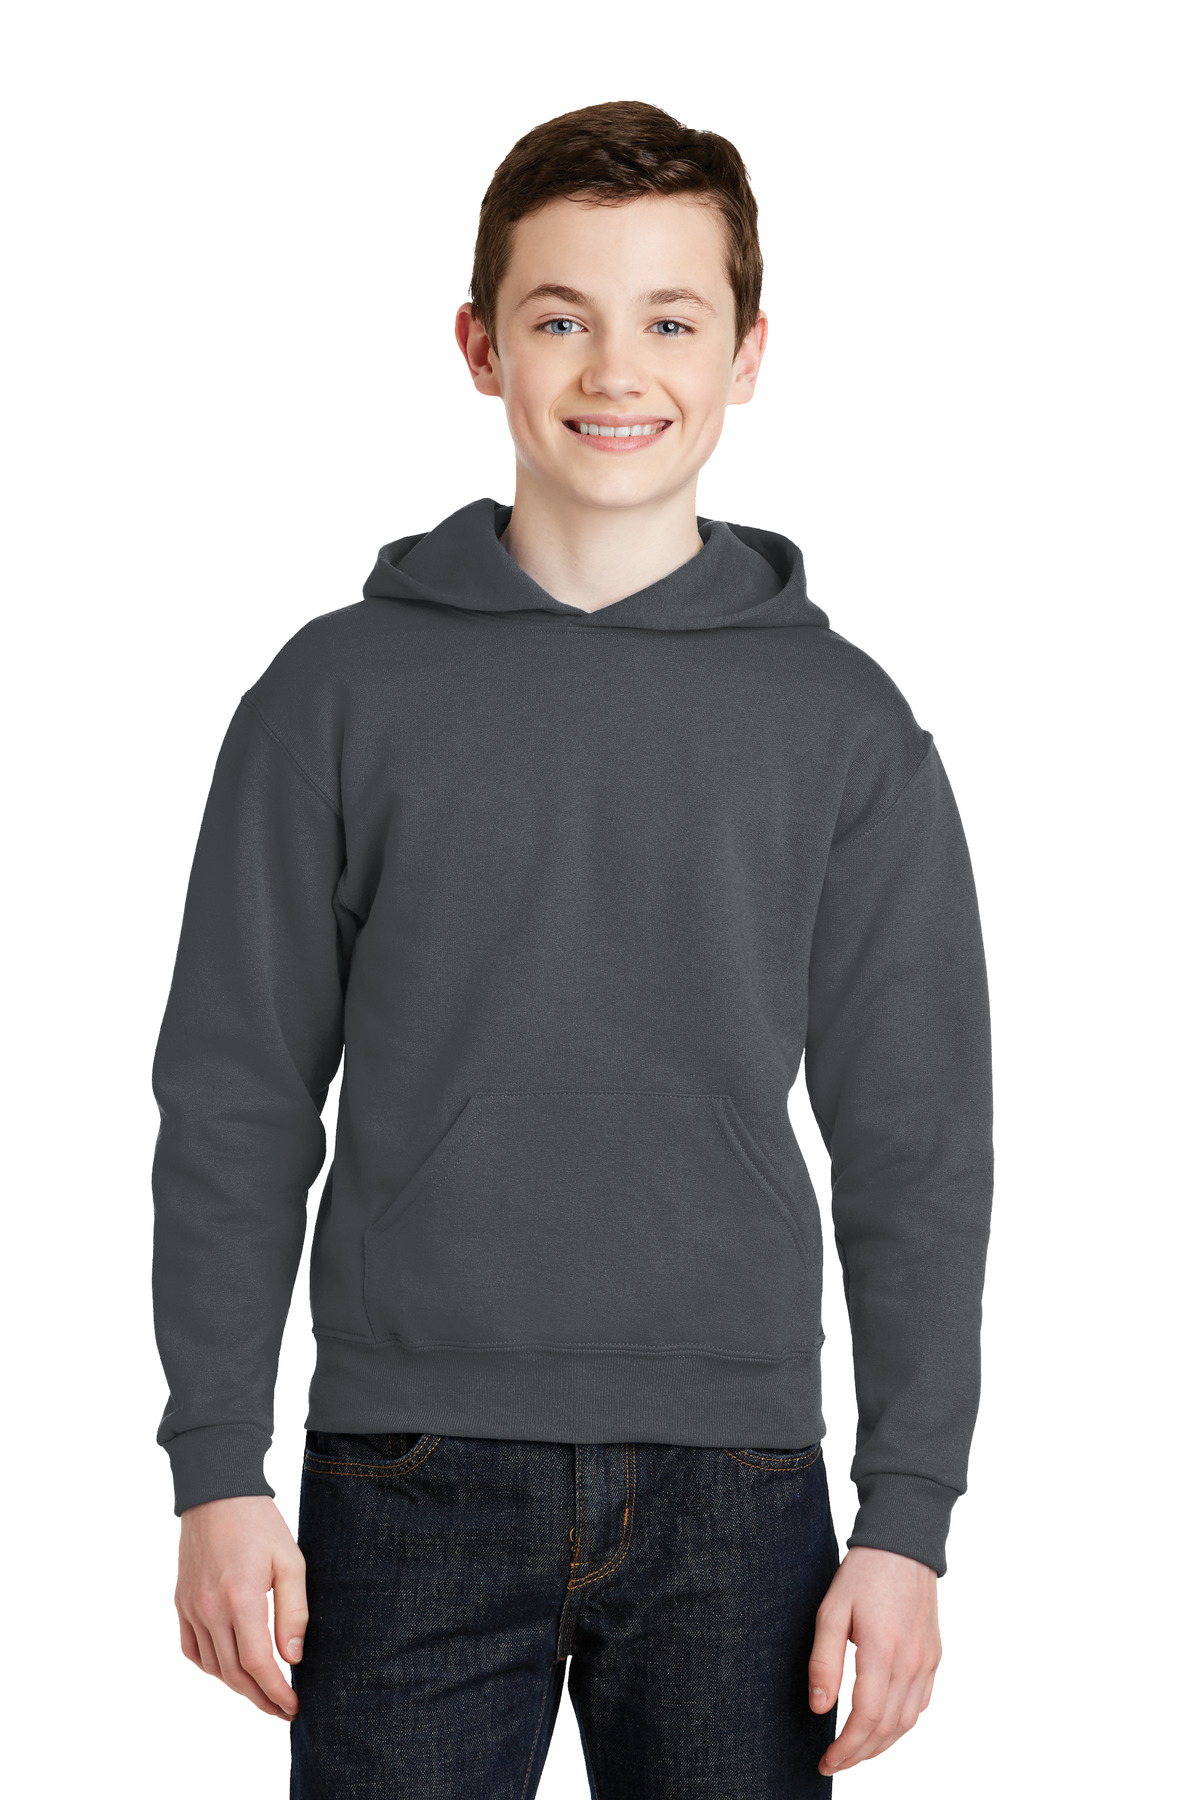 JERZEES - Youth NuBlend Pullover Hooded Sweatshirt.  996Y